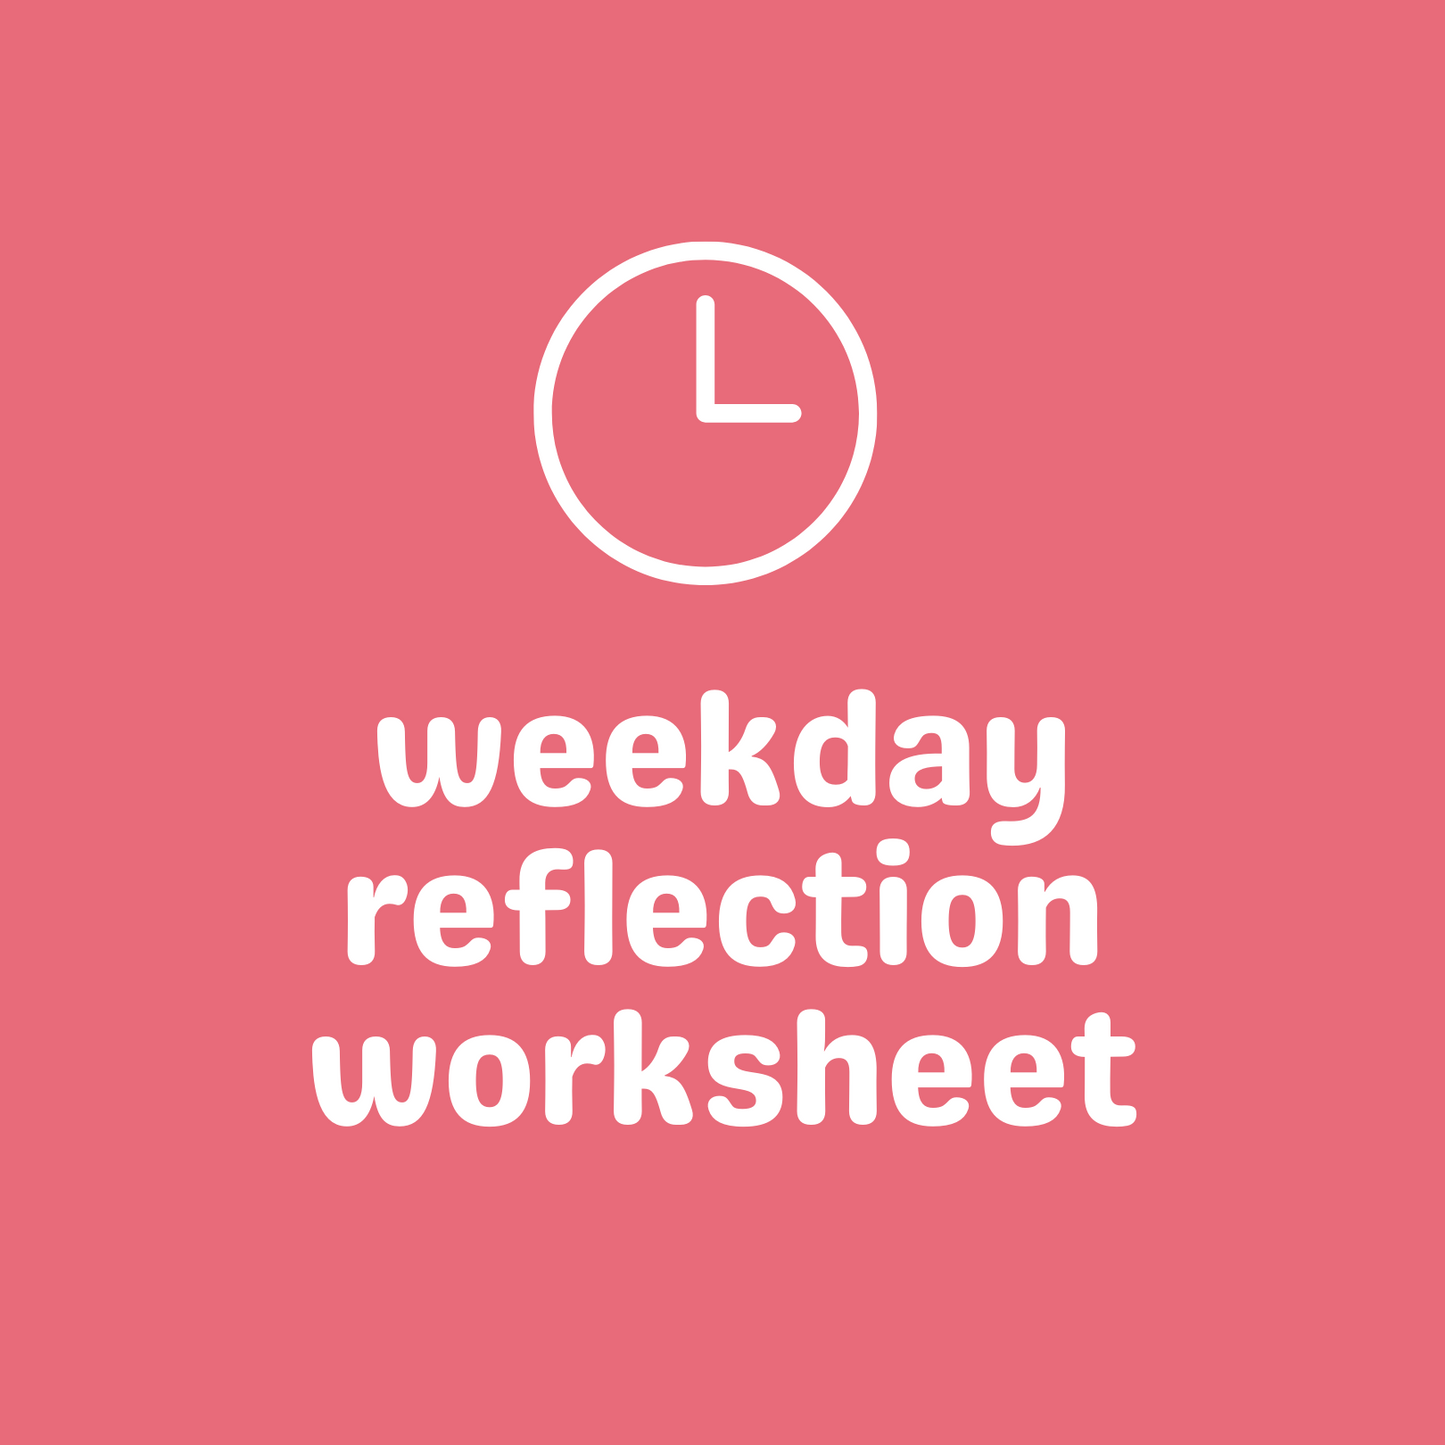 weekday reflection worksheet